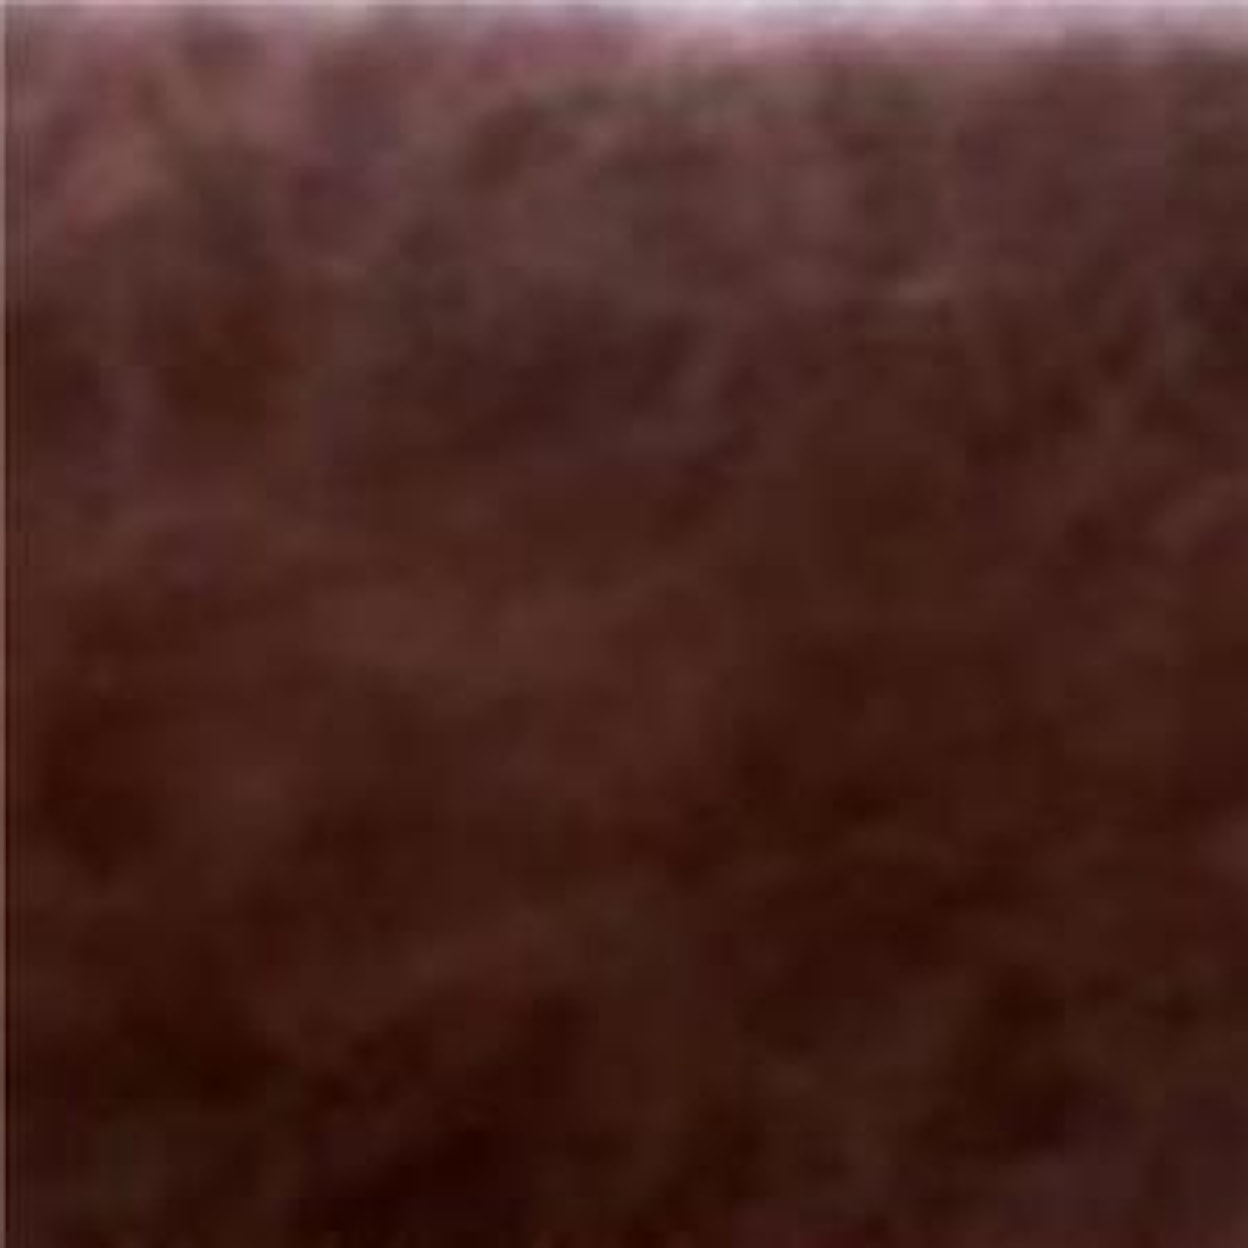  393-Medium Brown Leather